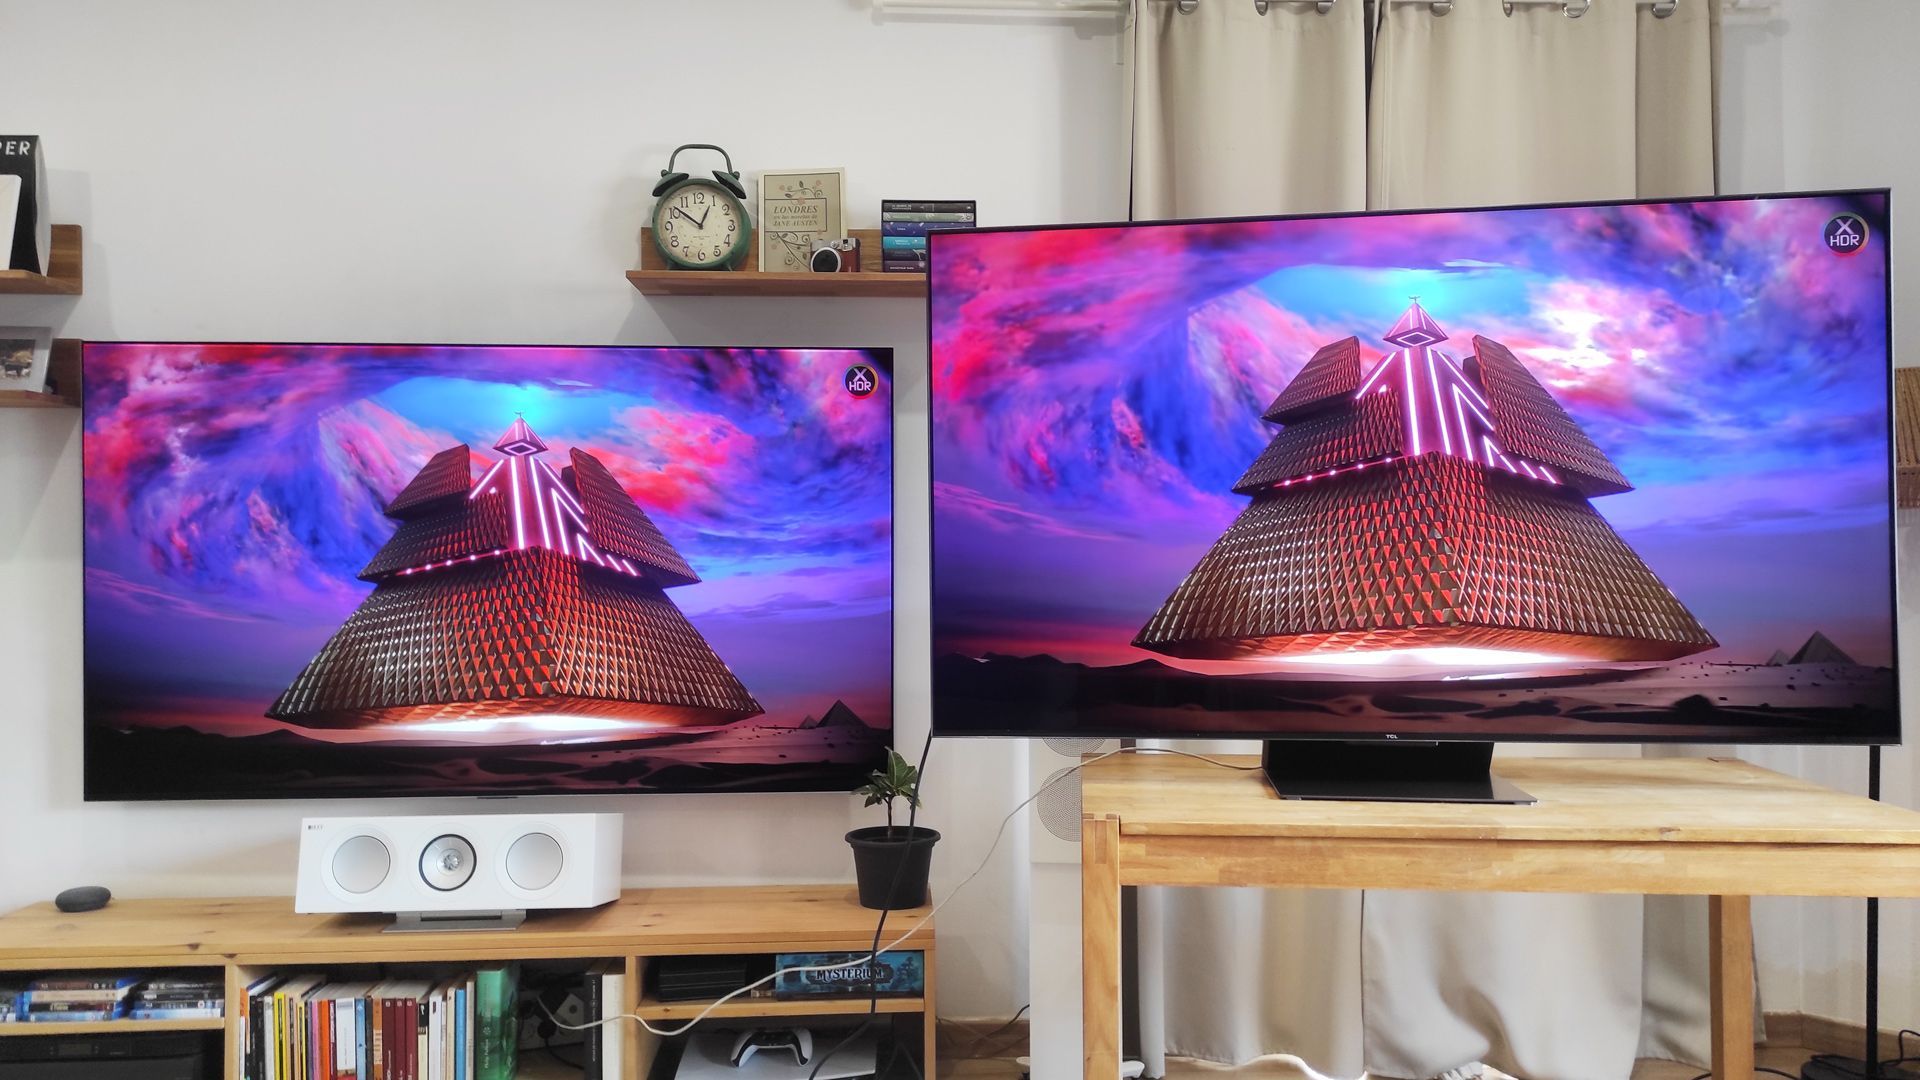 Comparativa entre los televisores LG OLED G3 vs TCL C845 QLED, dos de las mejores opciones de 2023